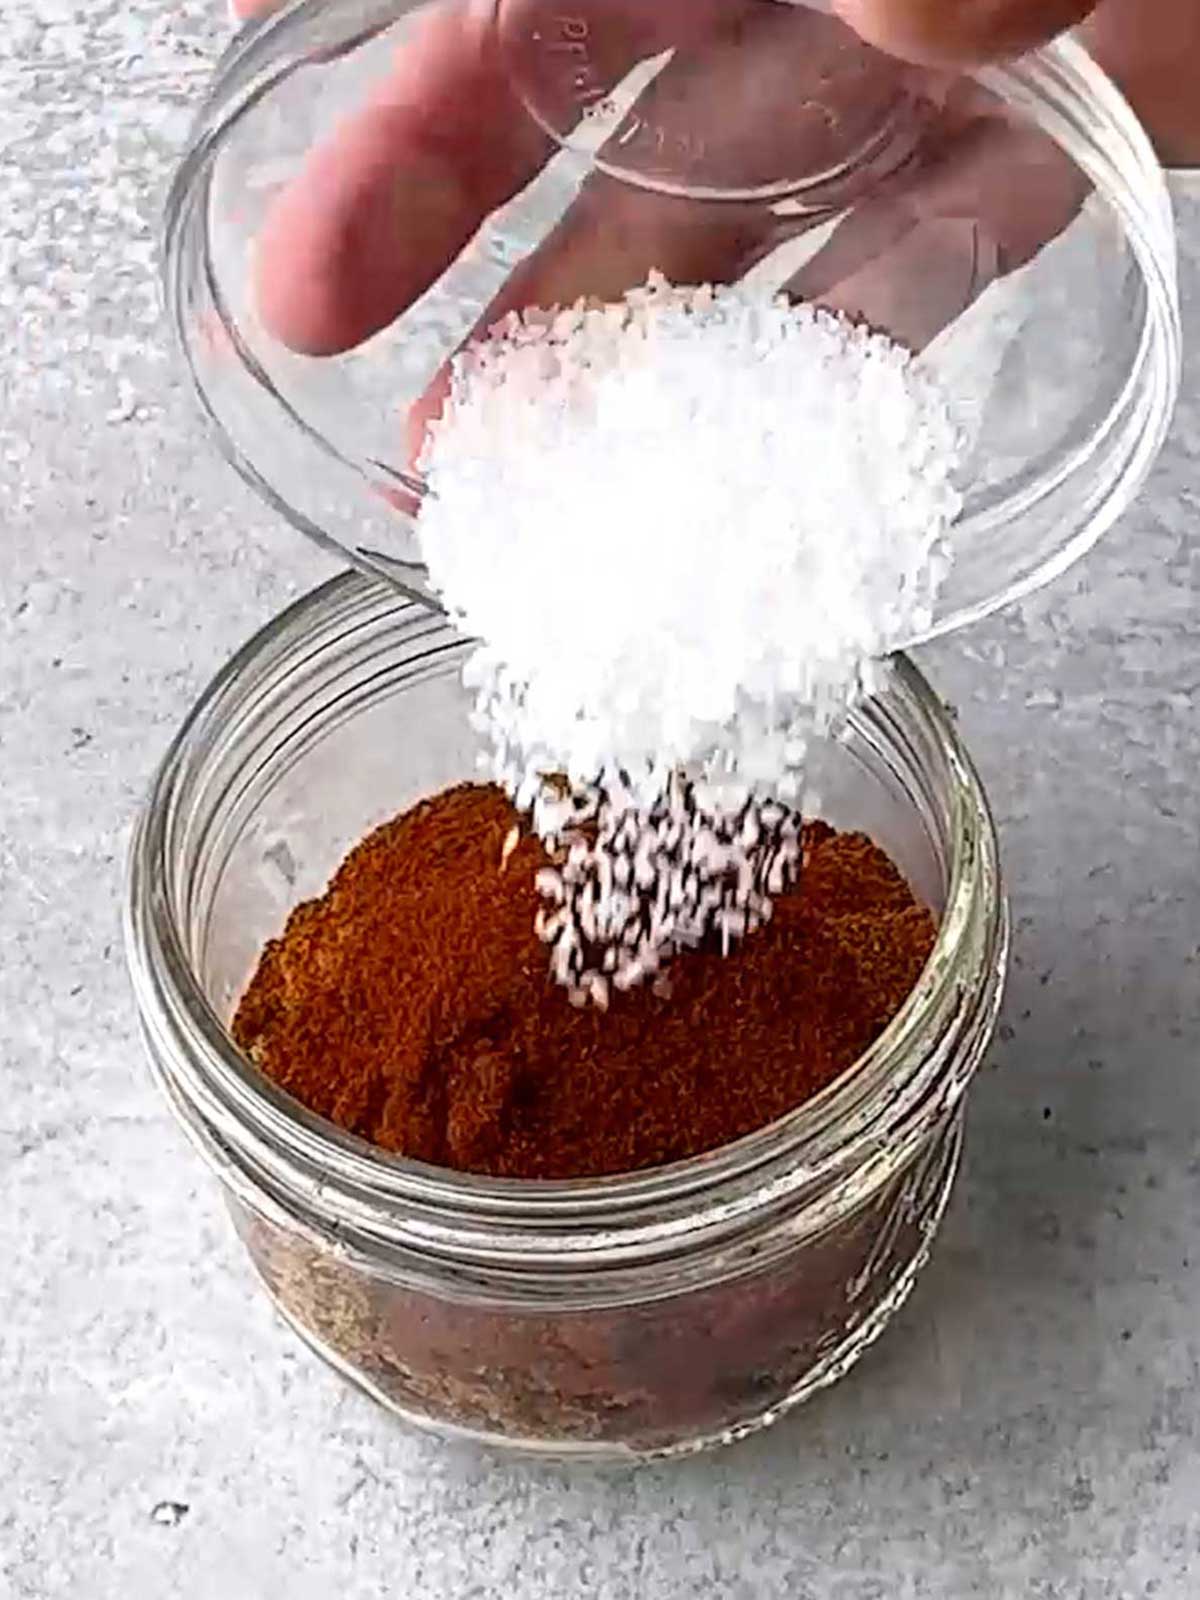 Adding salt to the dry rub ingredients.